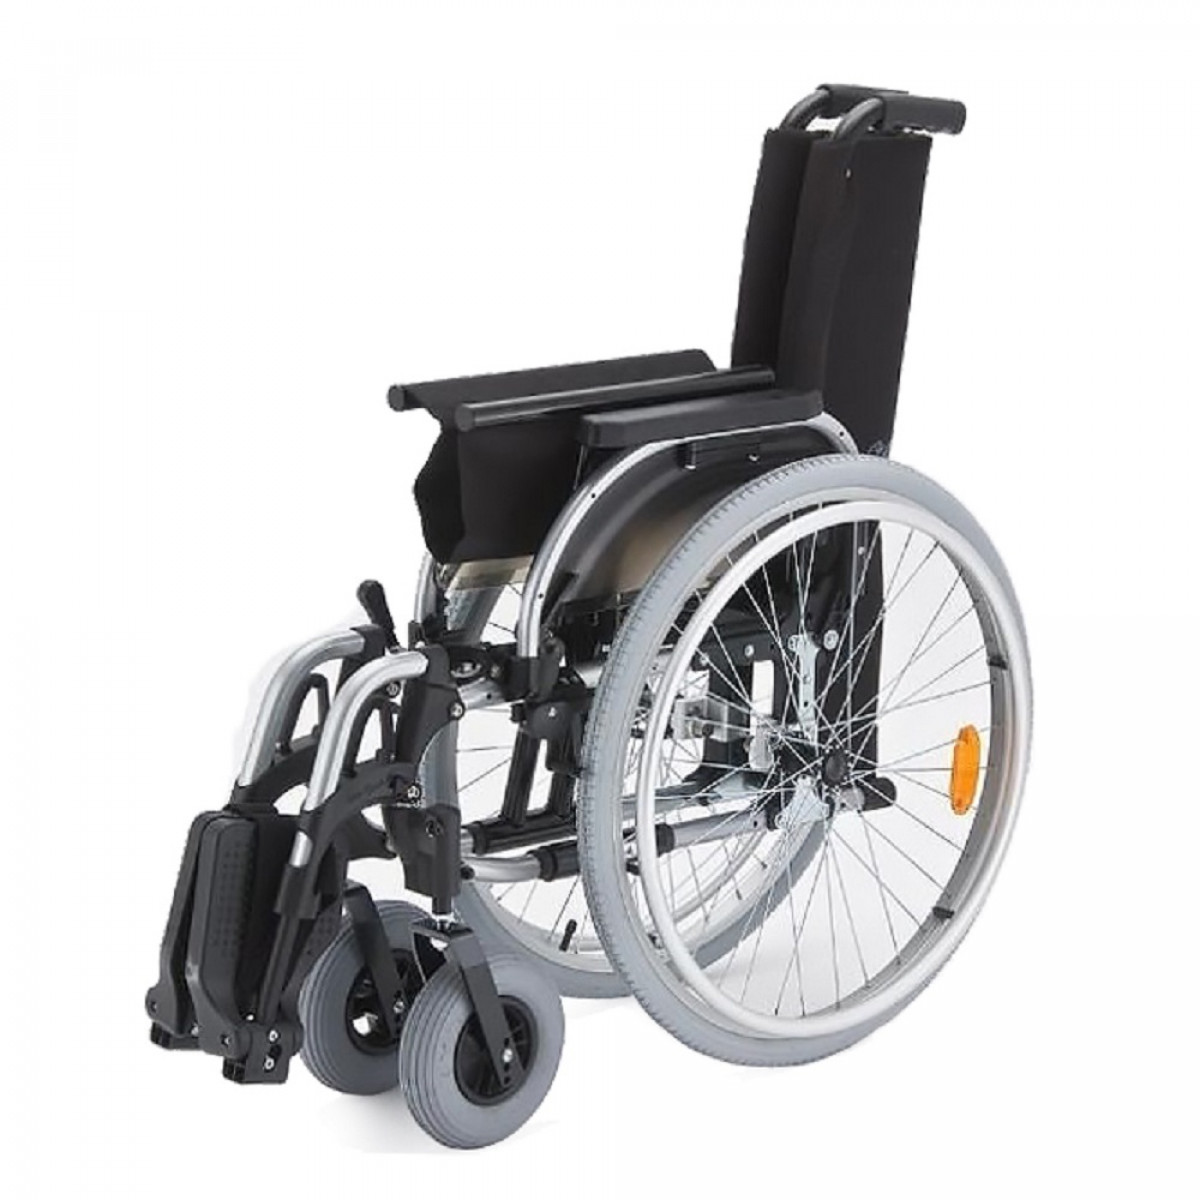 Коляска ottobock цена. Кресло-коляска Отто БОКК старт. Отто БОКК инвалидные коляски. Инвалидное кресло-коляска Отто БОКК старт. Кресло коляска Ottobock старт ШС 45.5.